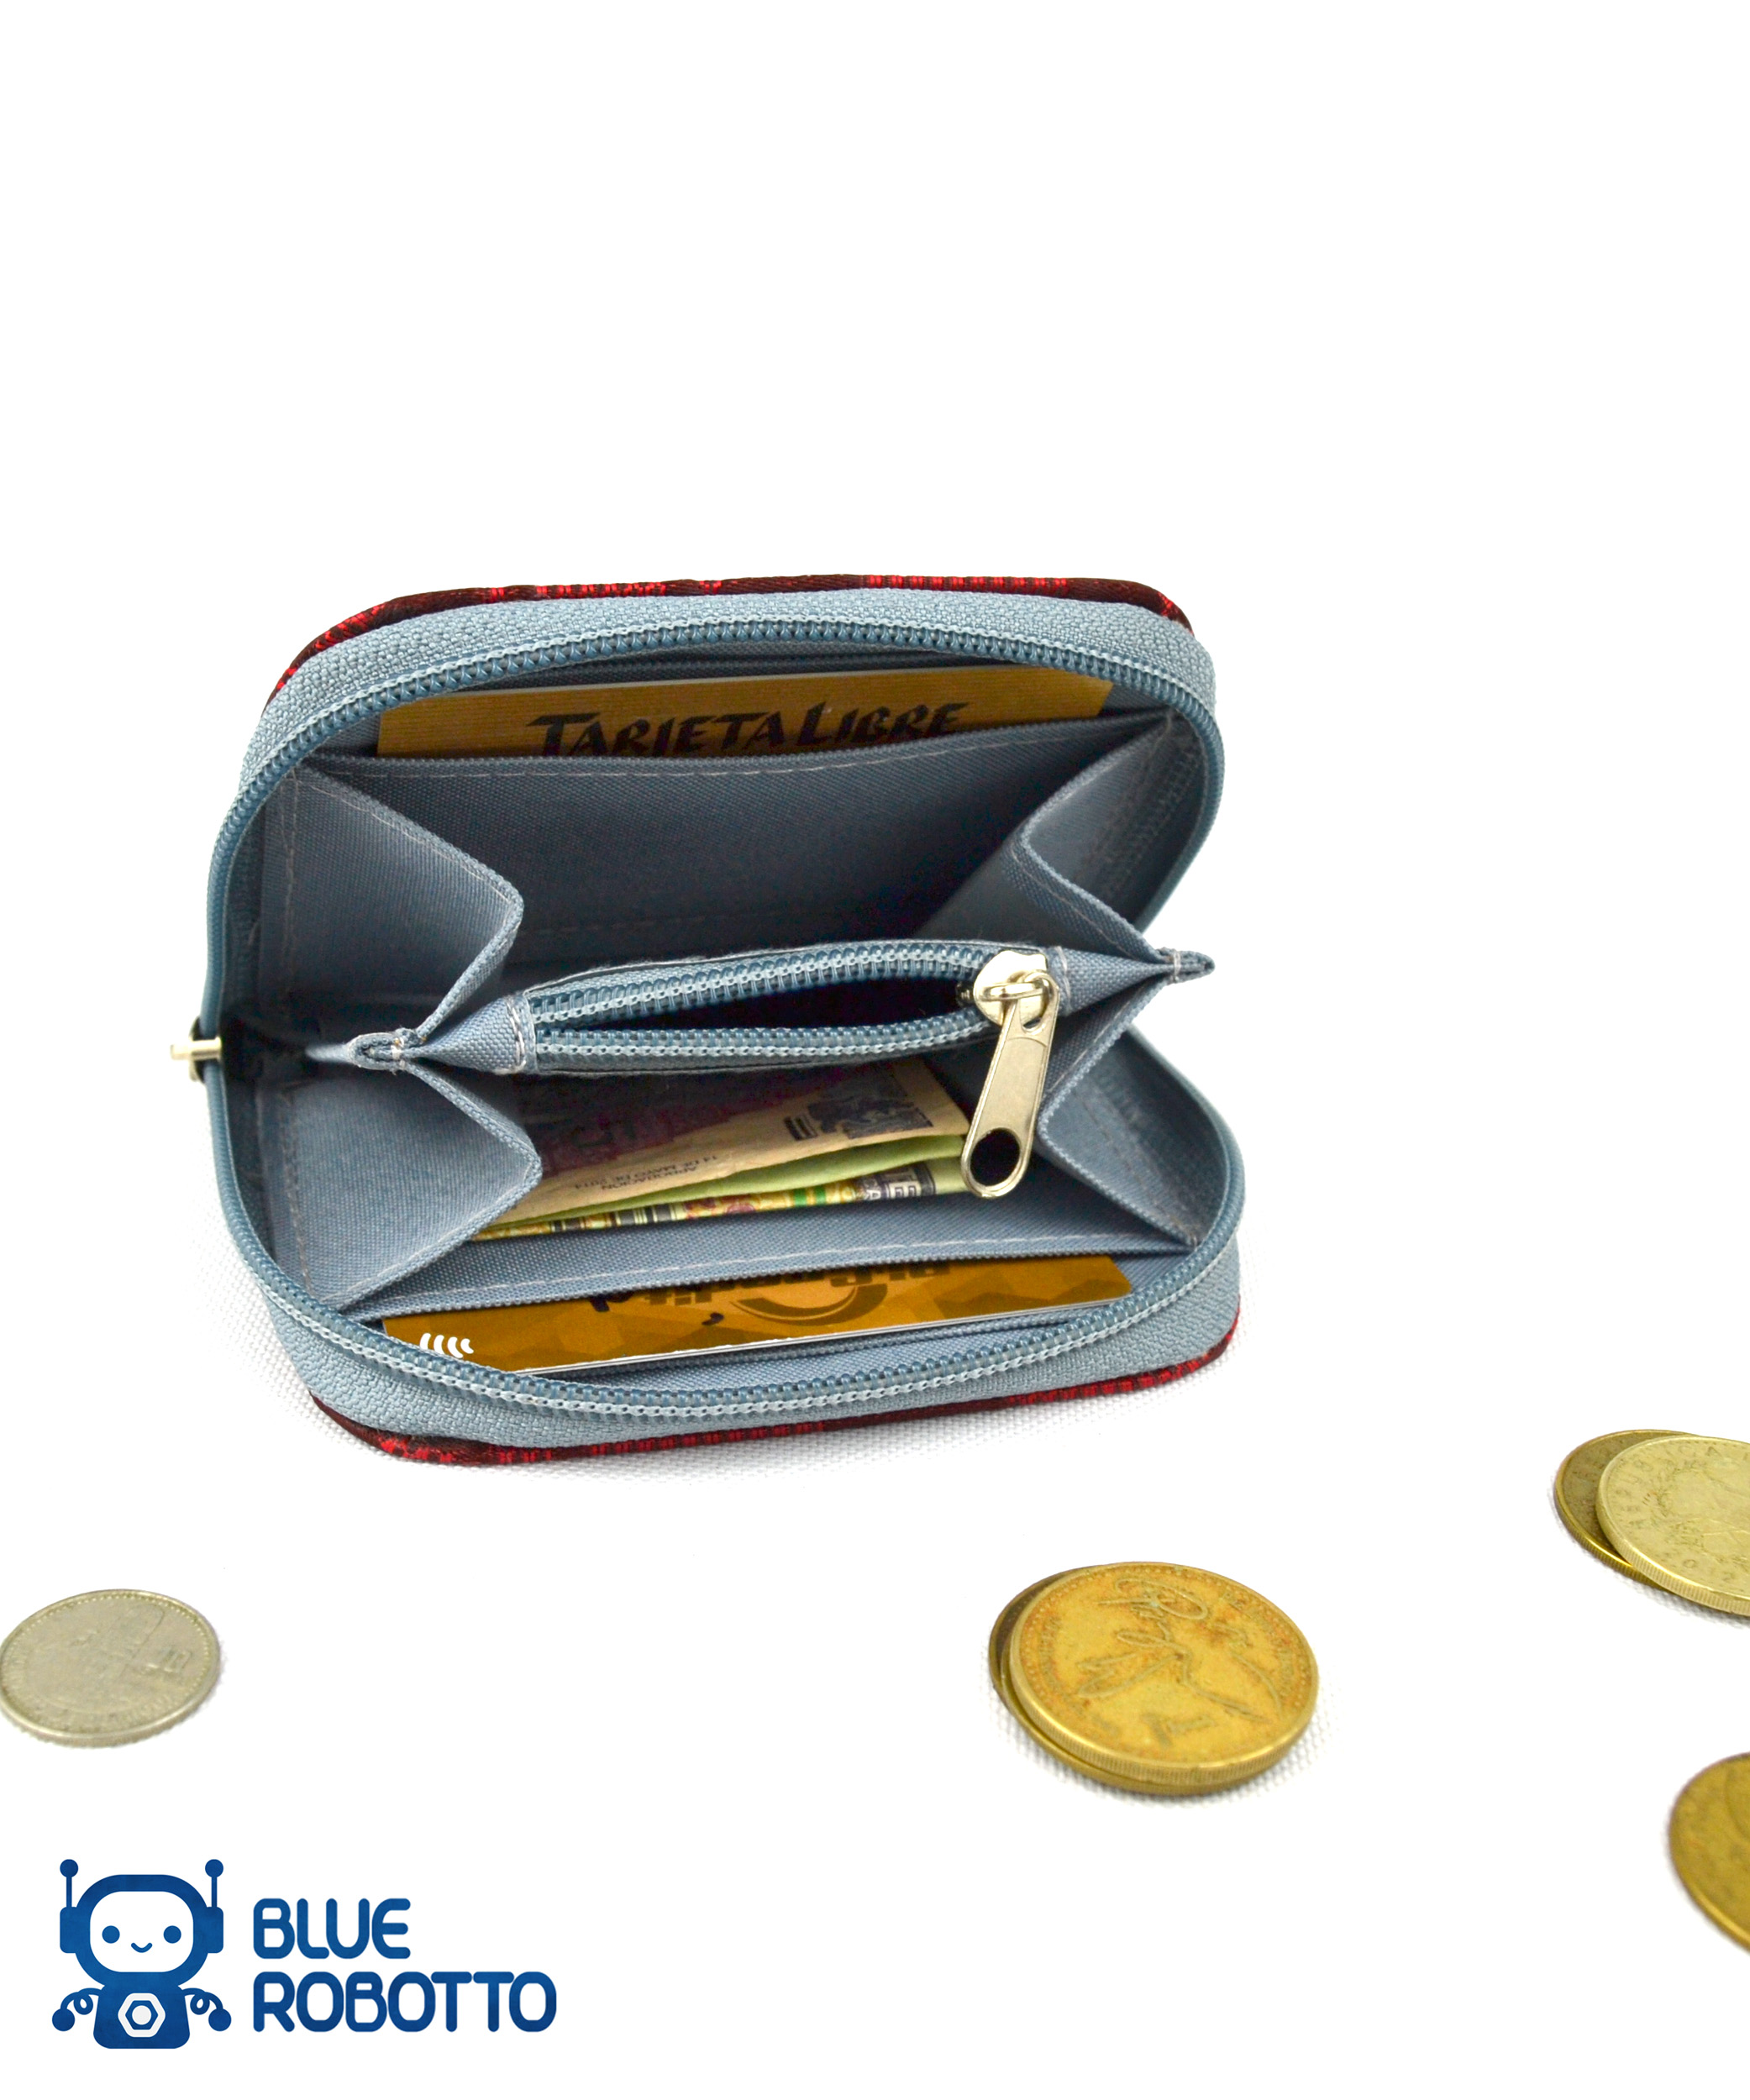 Milano Leather Wallet Pouch Purse Zipper Change Bag | Leather wallet, Wallet  pouch, Pouch